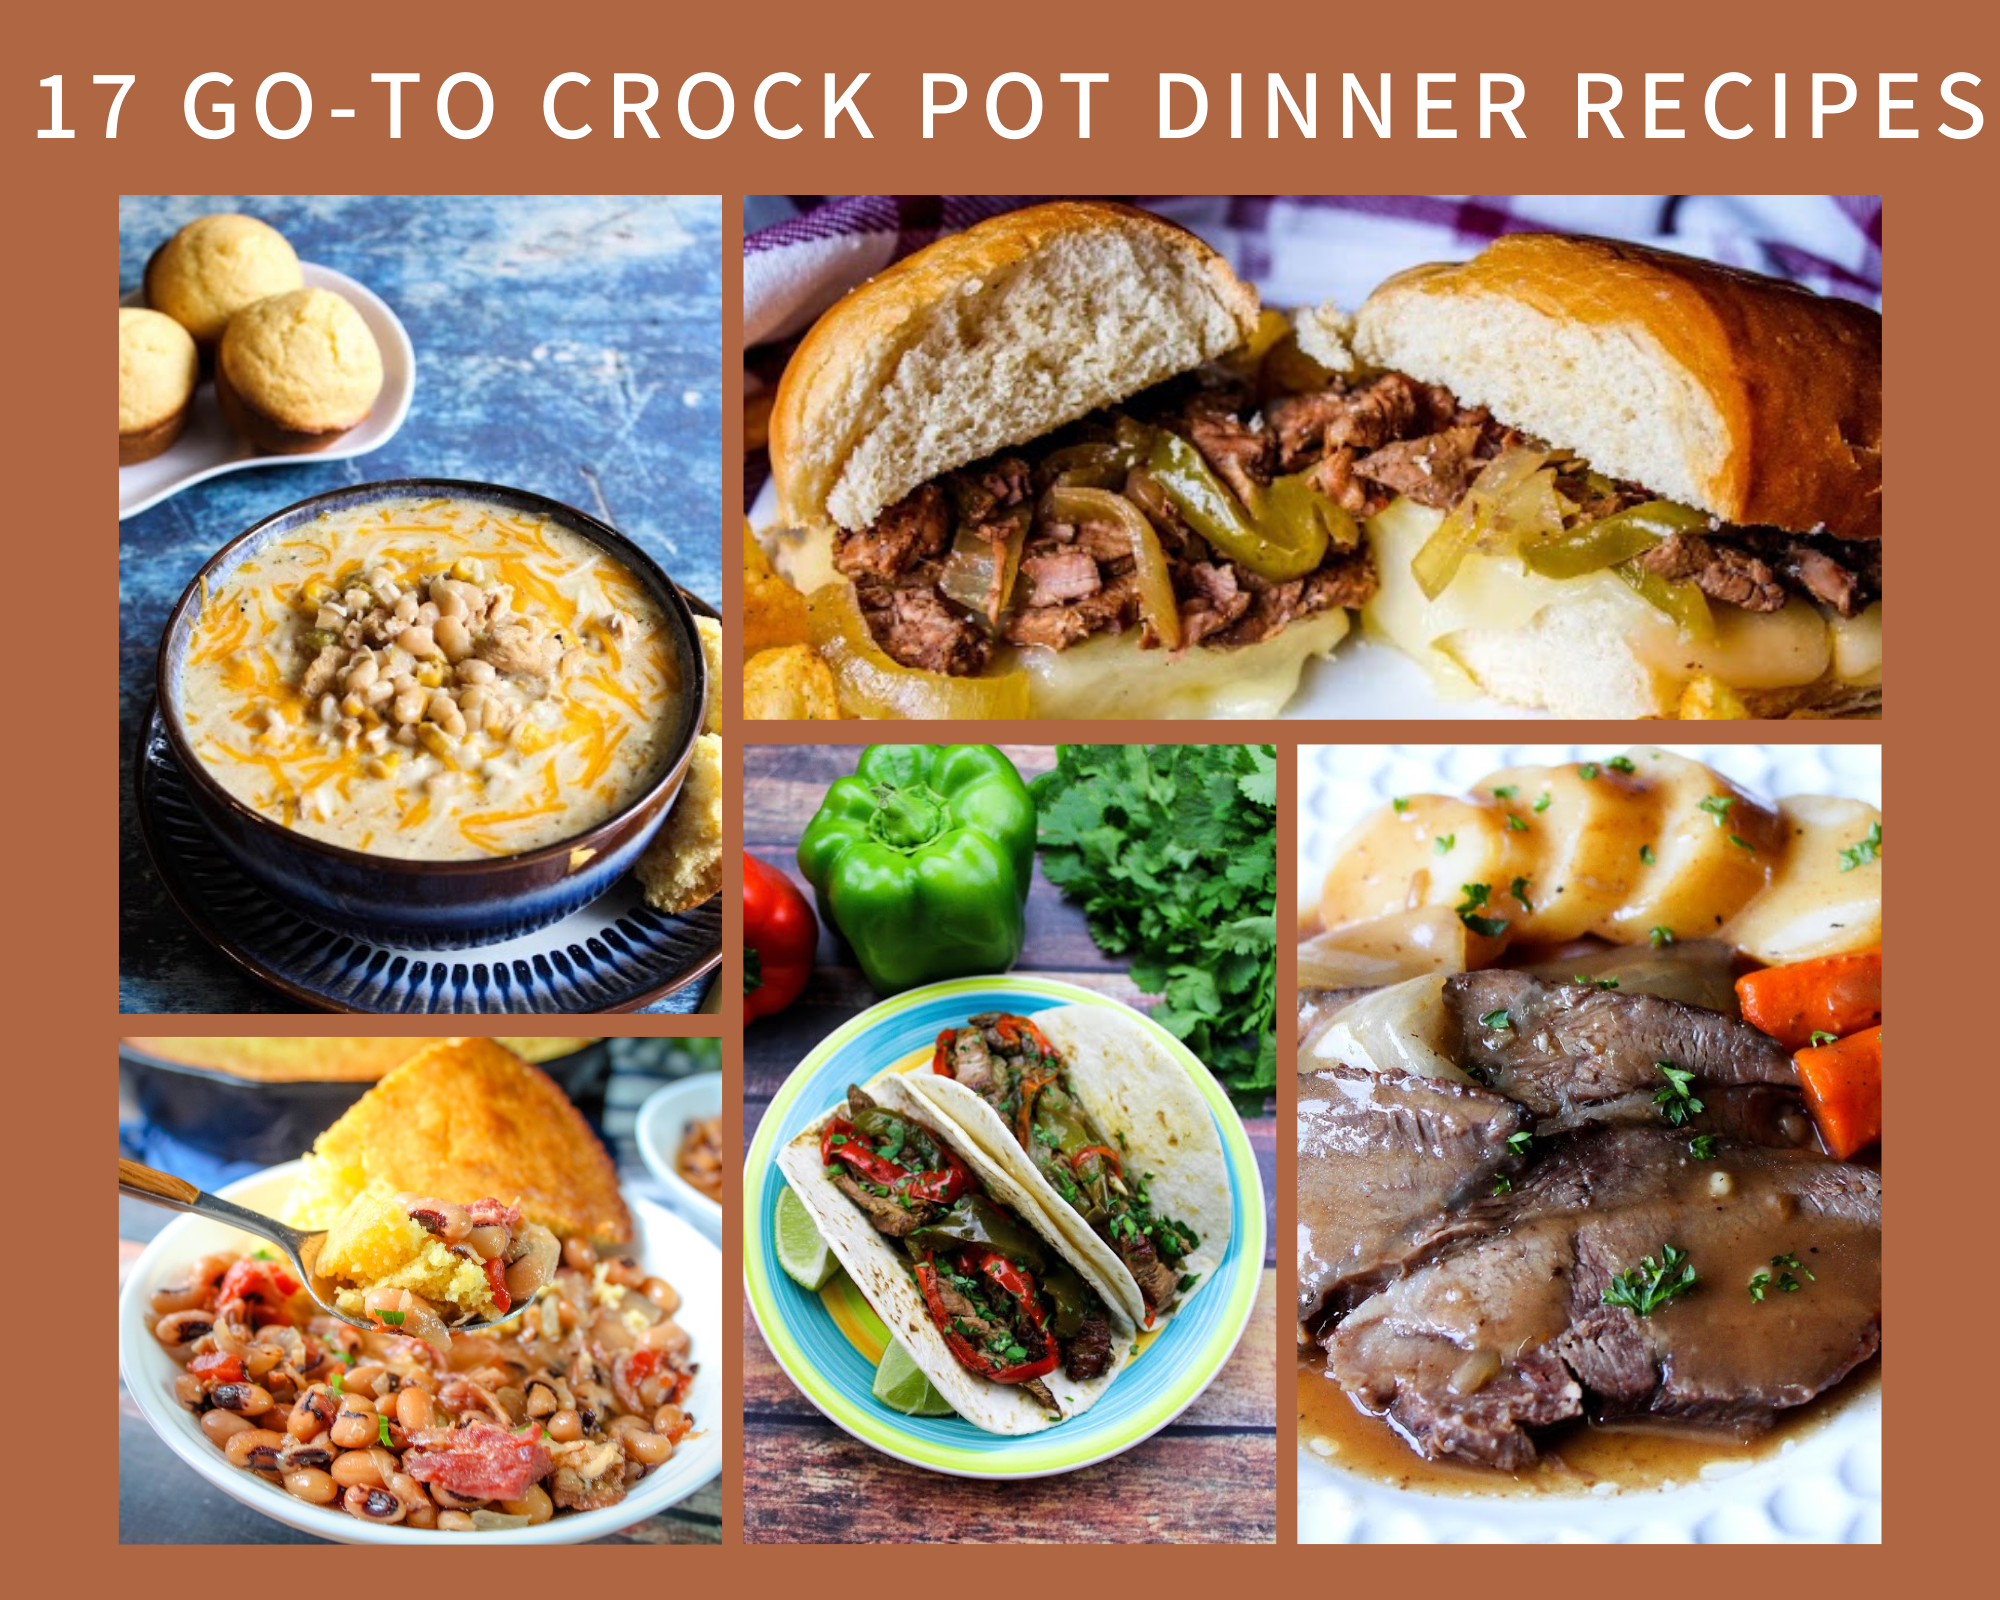 Crock pot dinner recipes